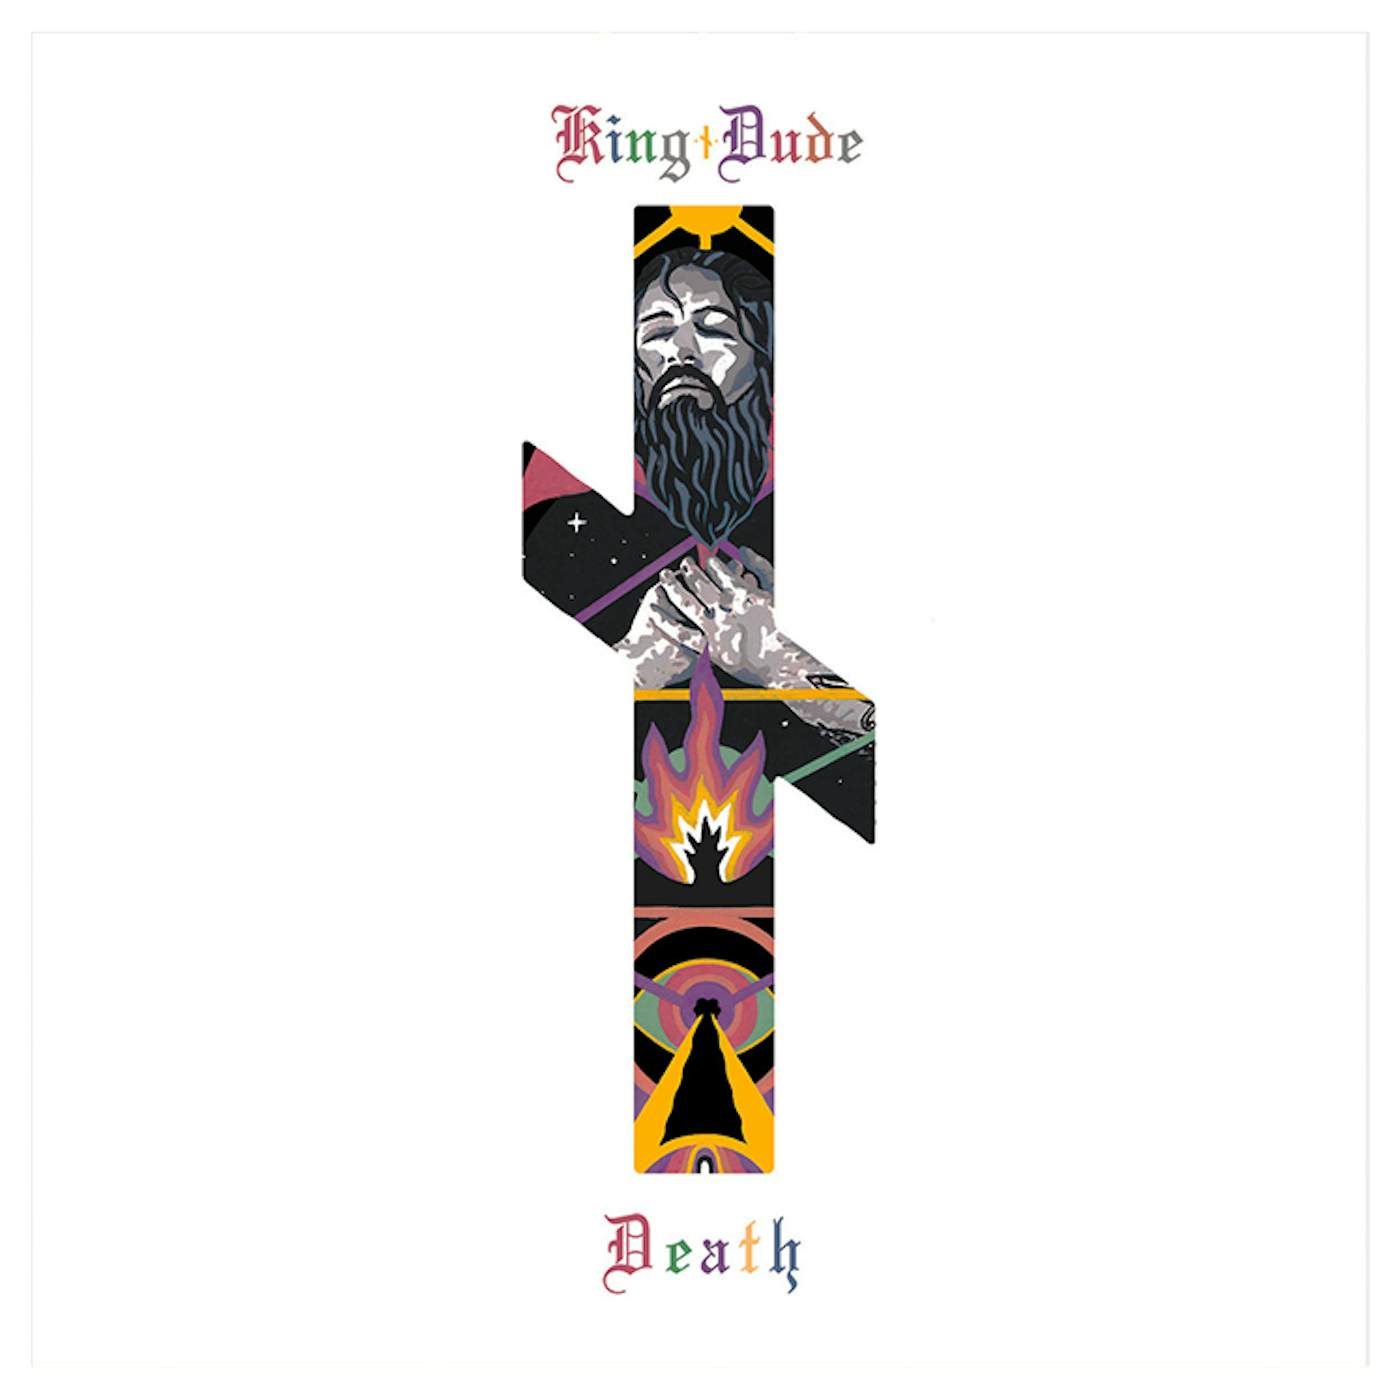 KING DUDE - 'Death' DigiCD with die-cut